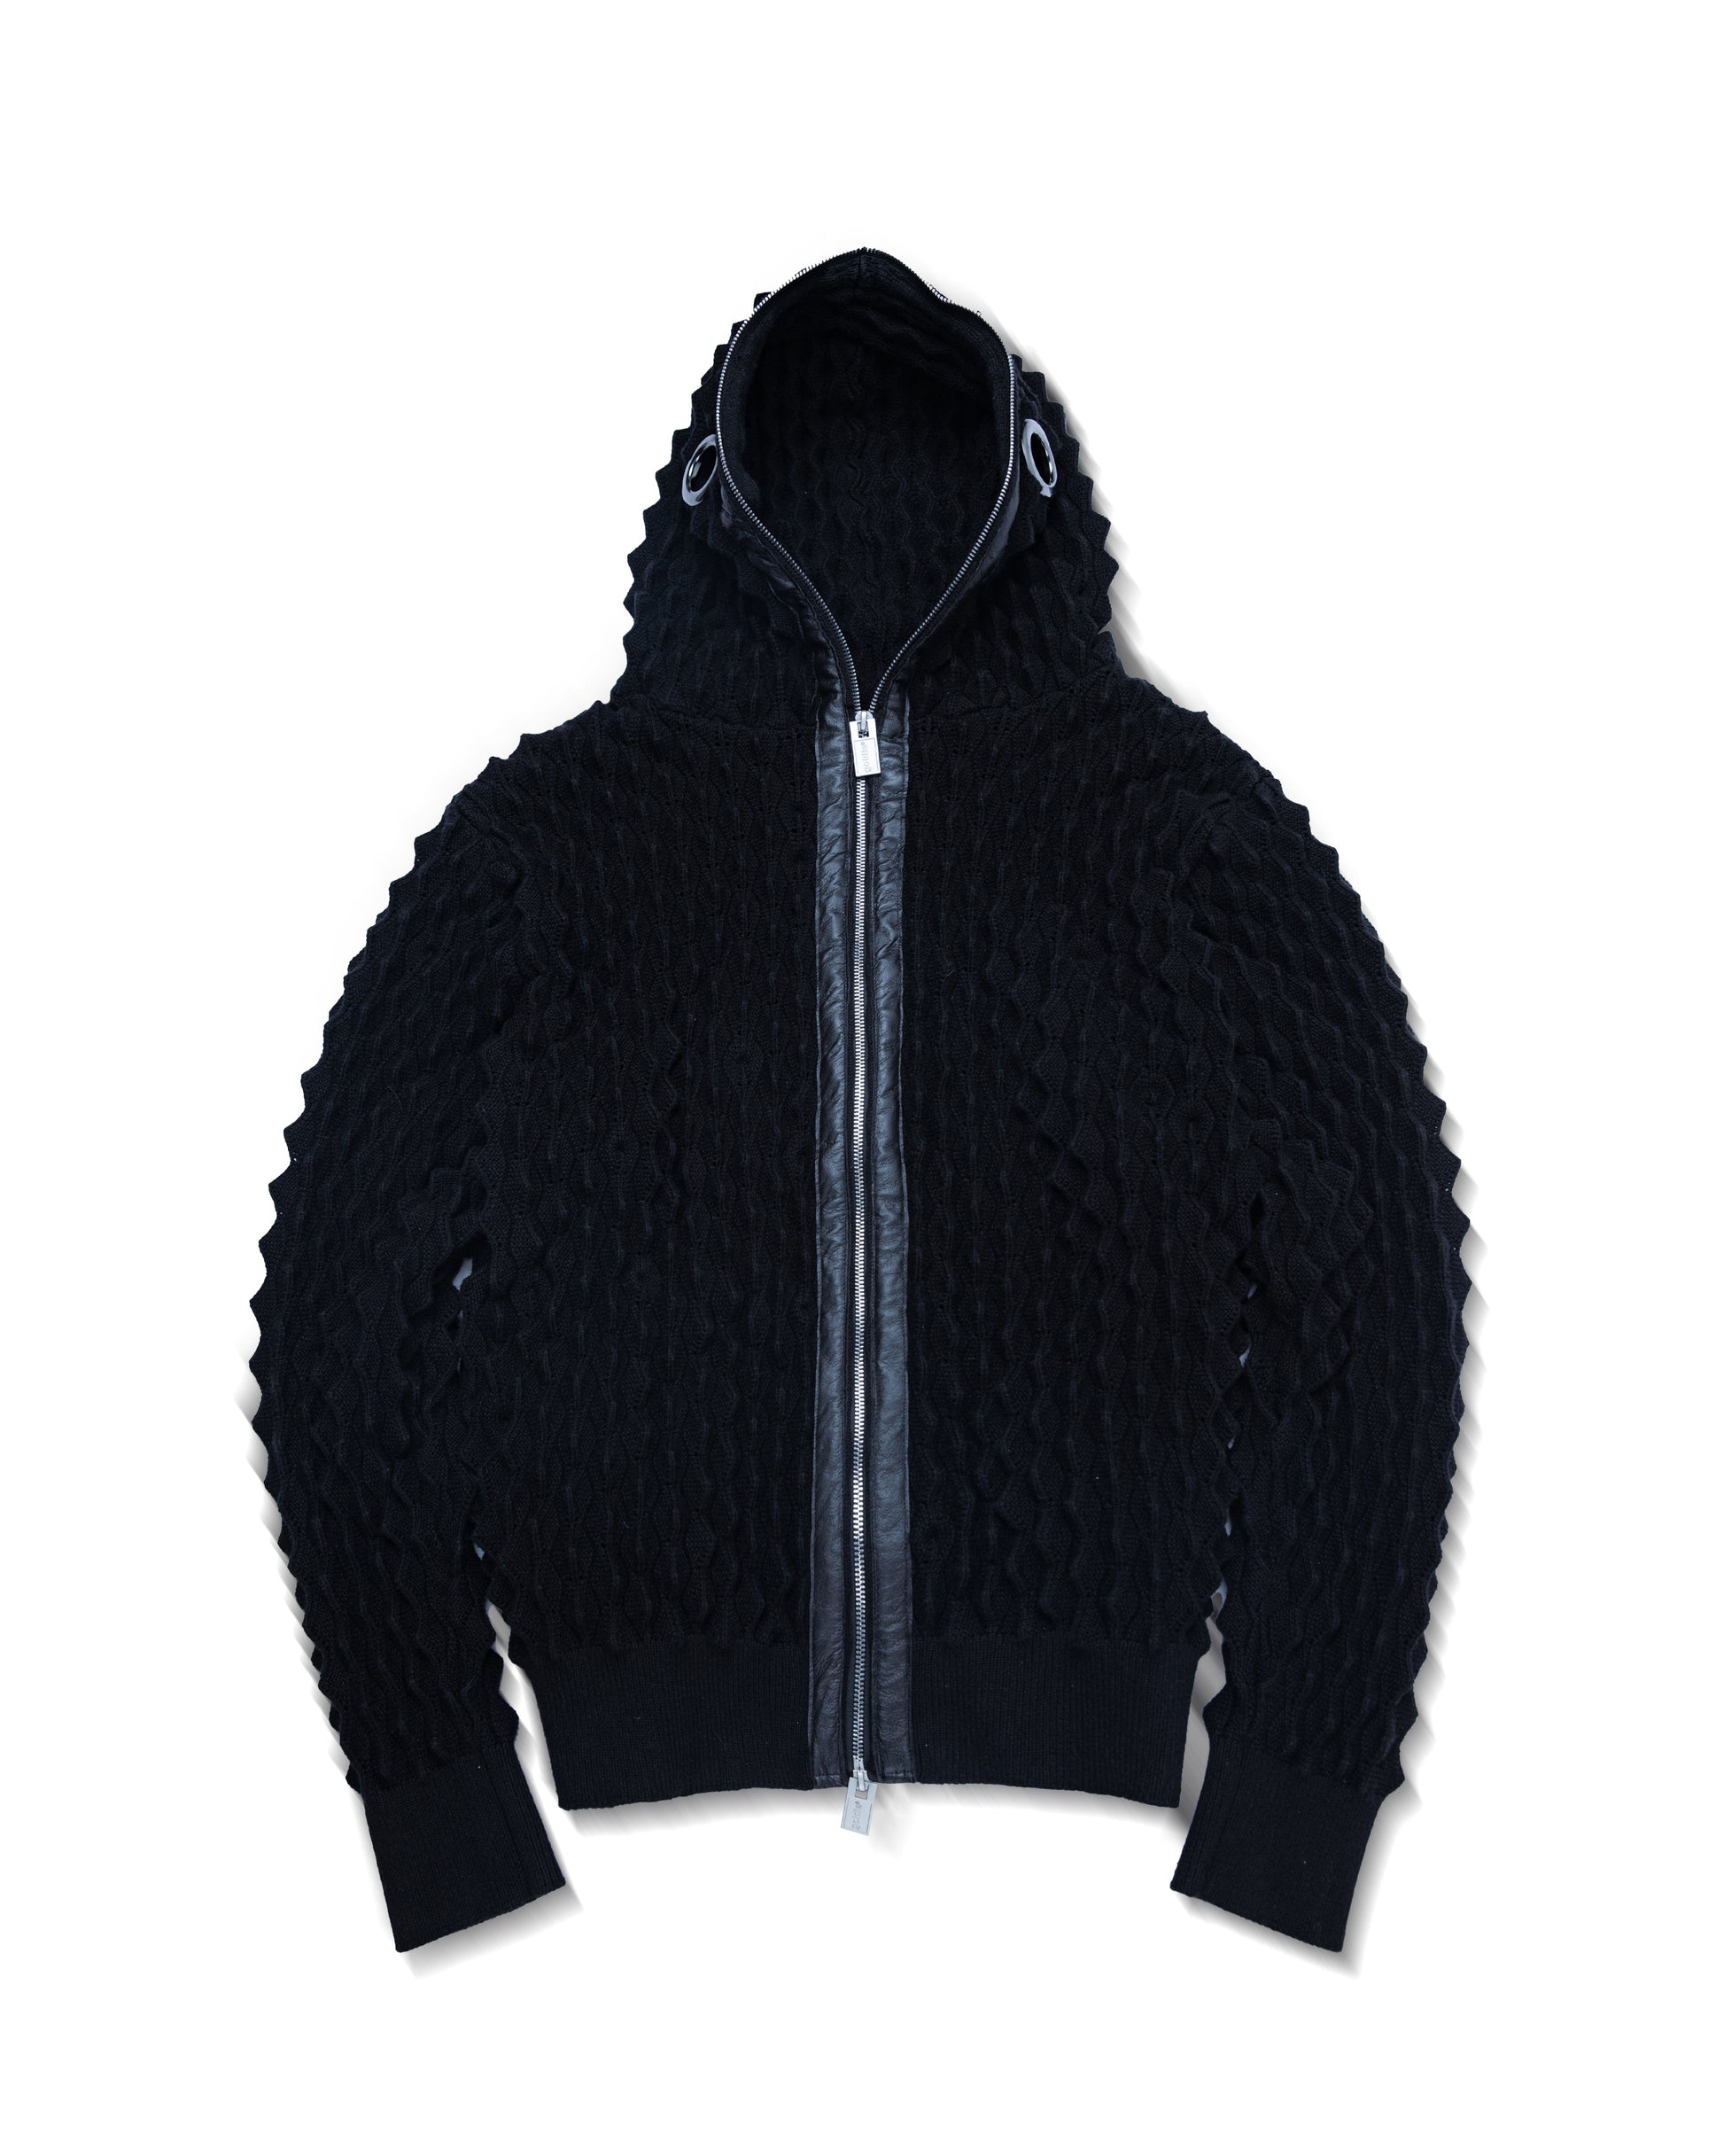 thorn-knit-zipped-hoodie-GOLDIE-ASTOUD